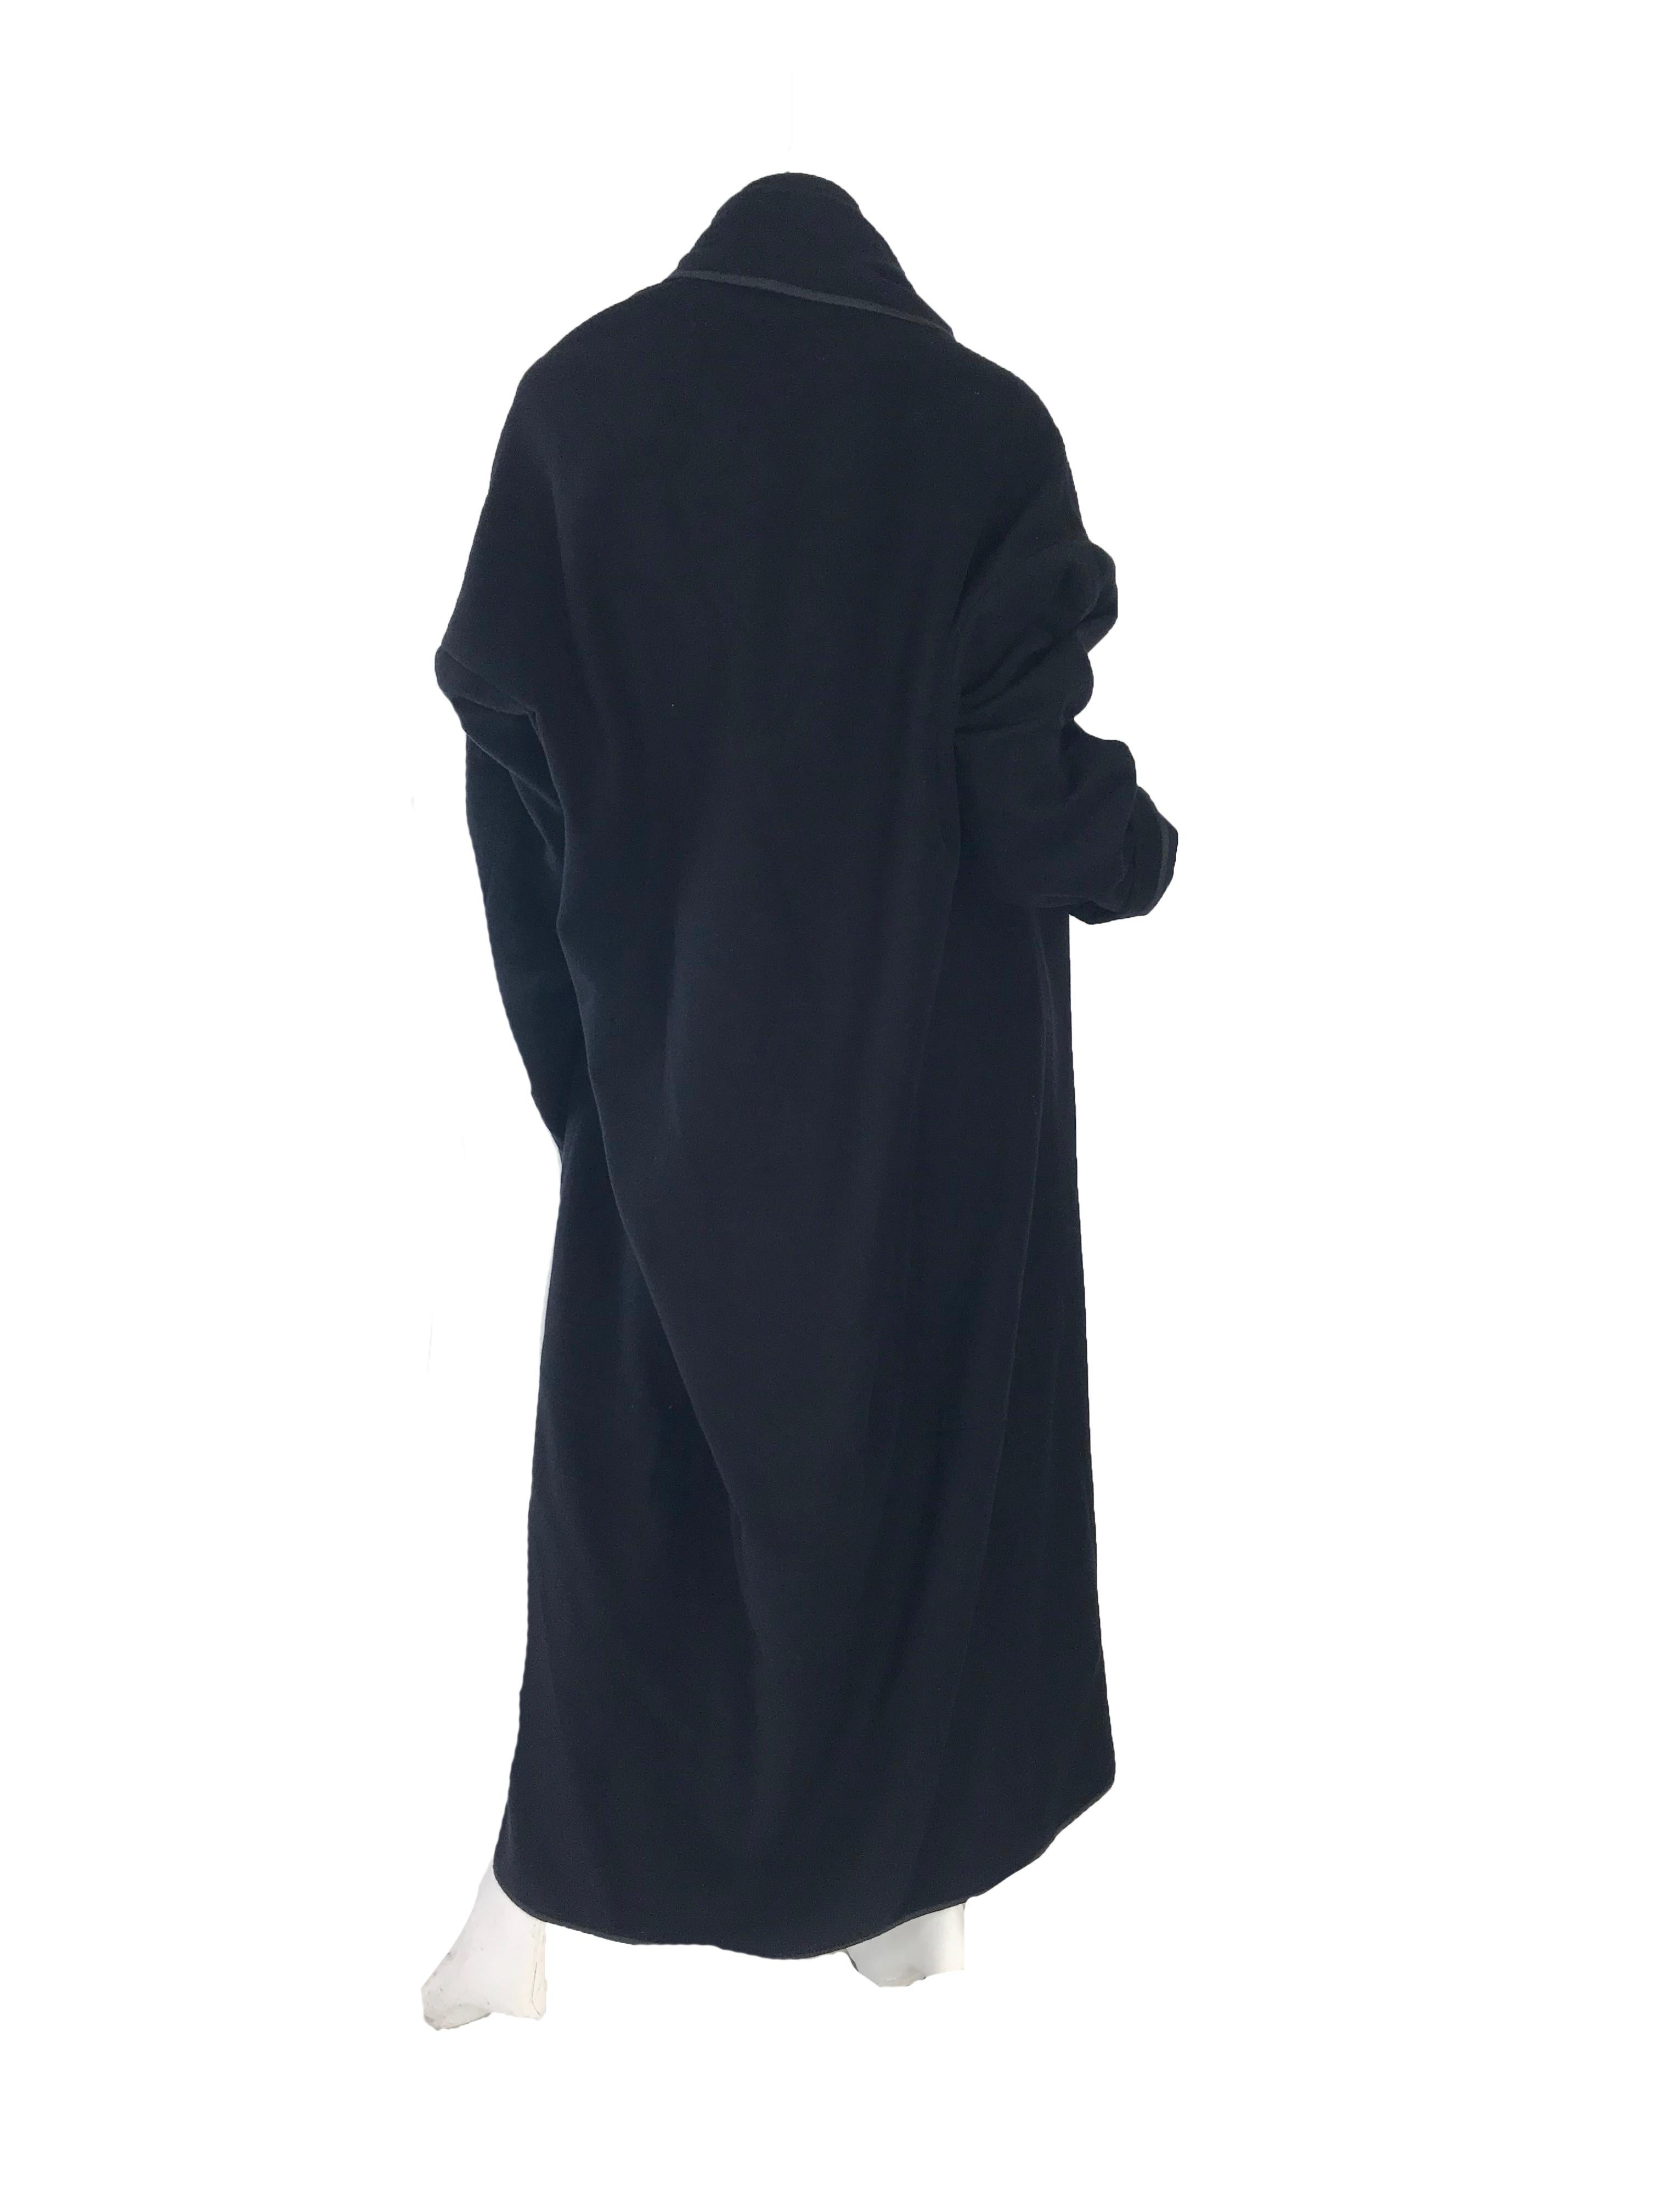 1999 Comme des Garcons black cashmere oversized shawl coat.

C. 1999
Made in Japan
Cashmere
Size M
